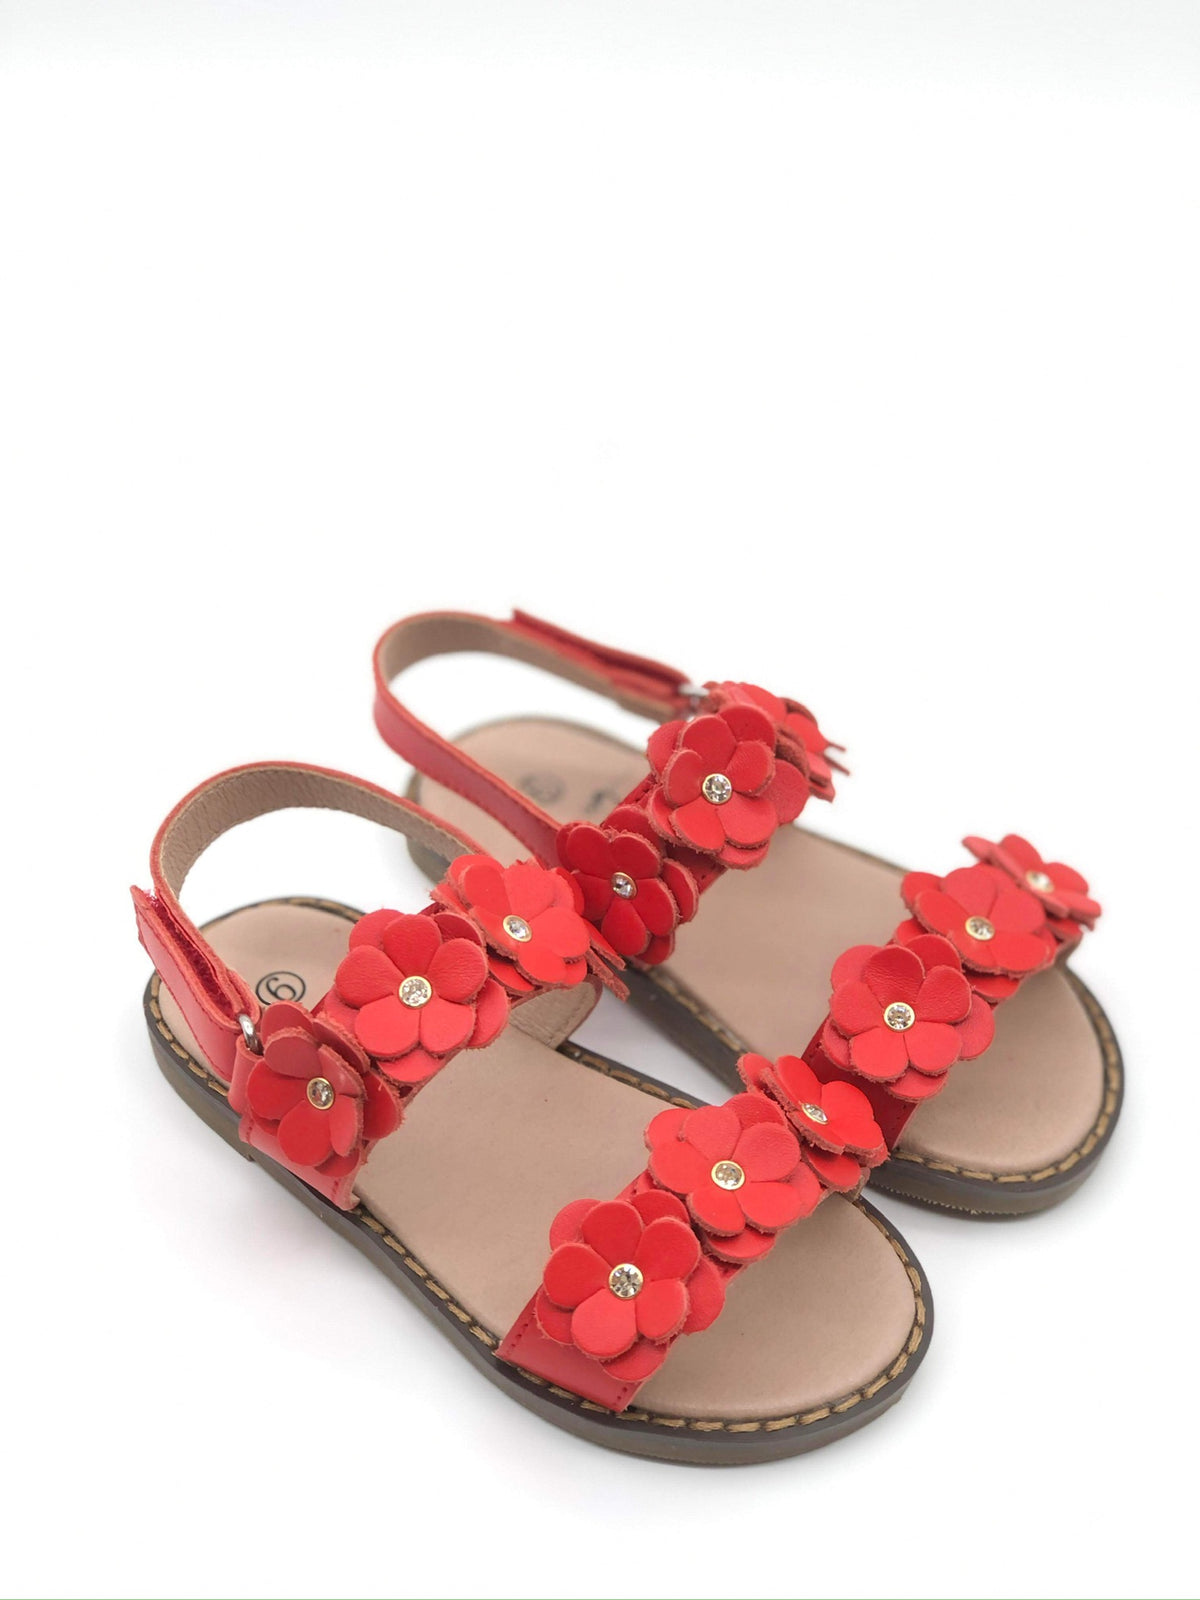 Flower Sandals - Red